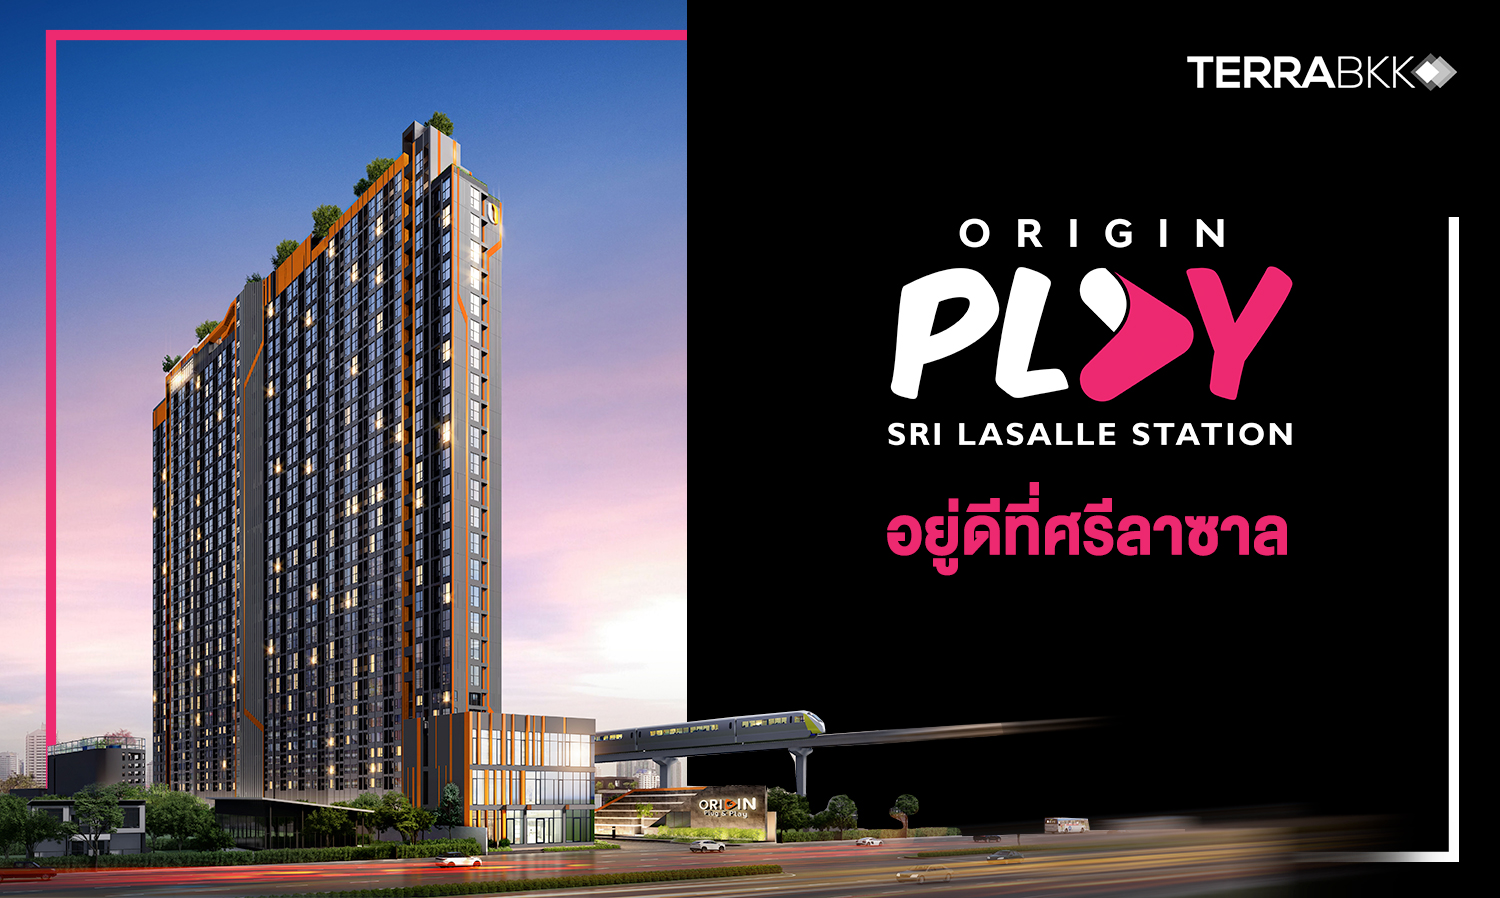 Origin Play Sri Lasalle Station อยู่ดีที่ศรีลาซาล